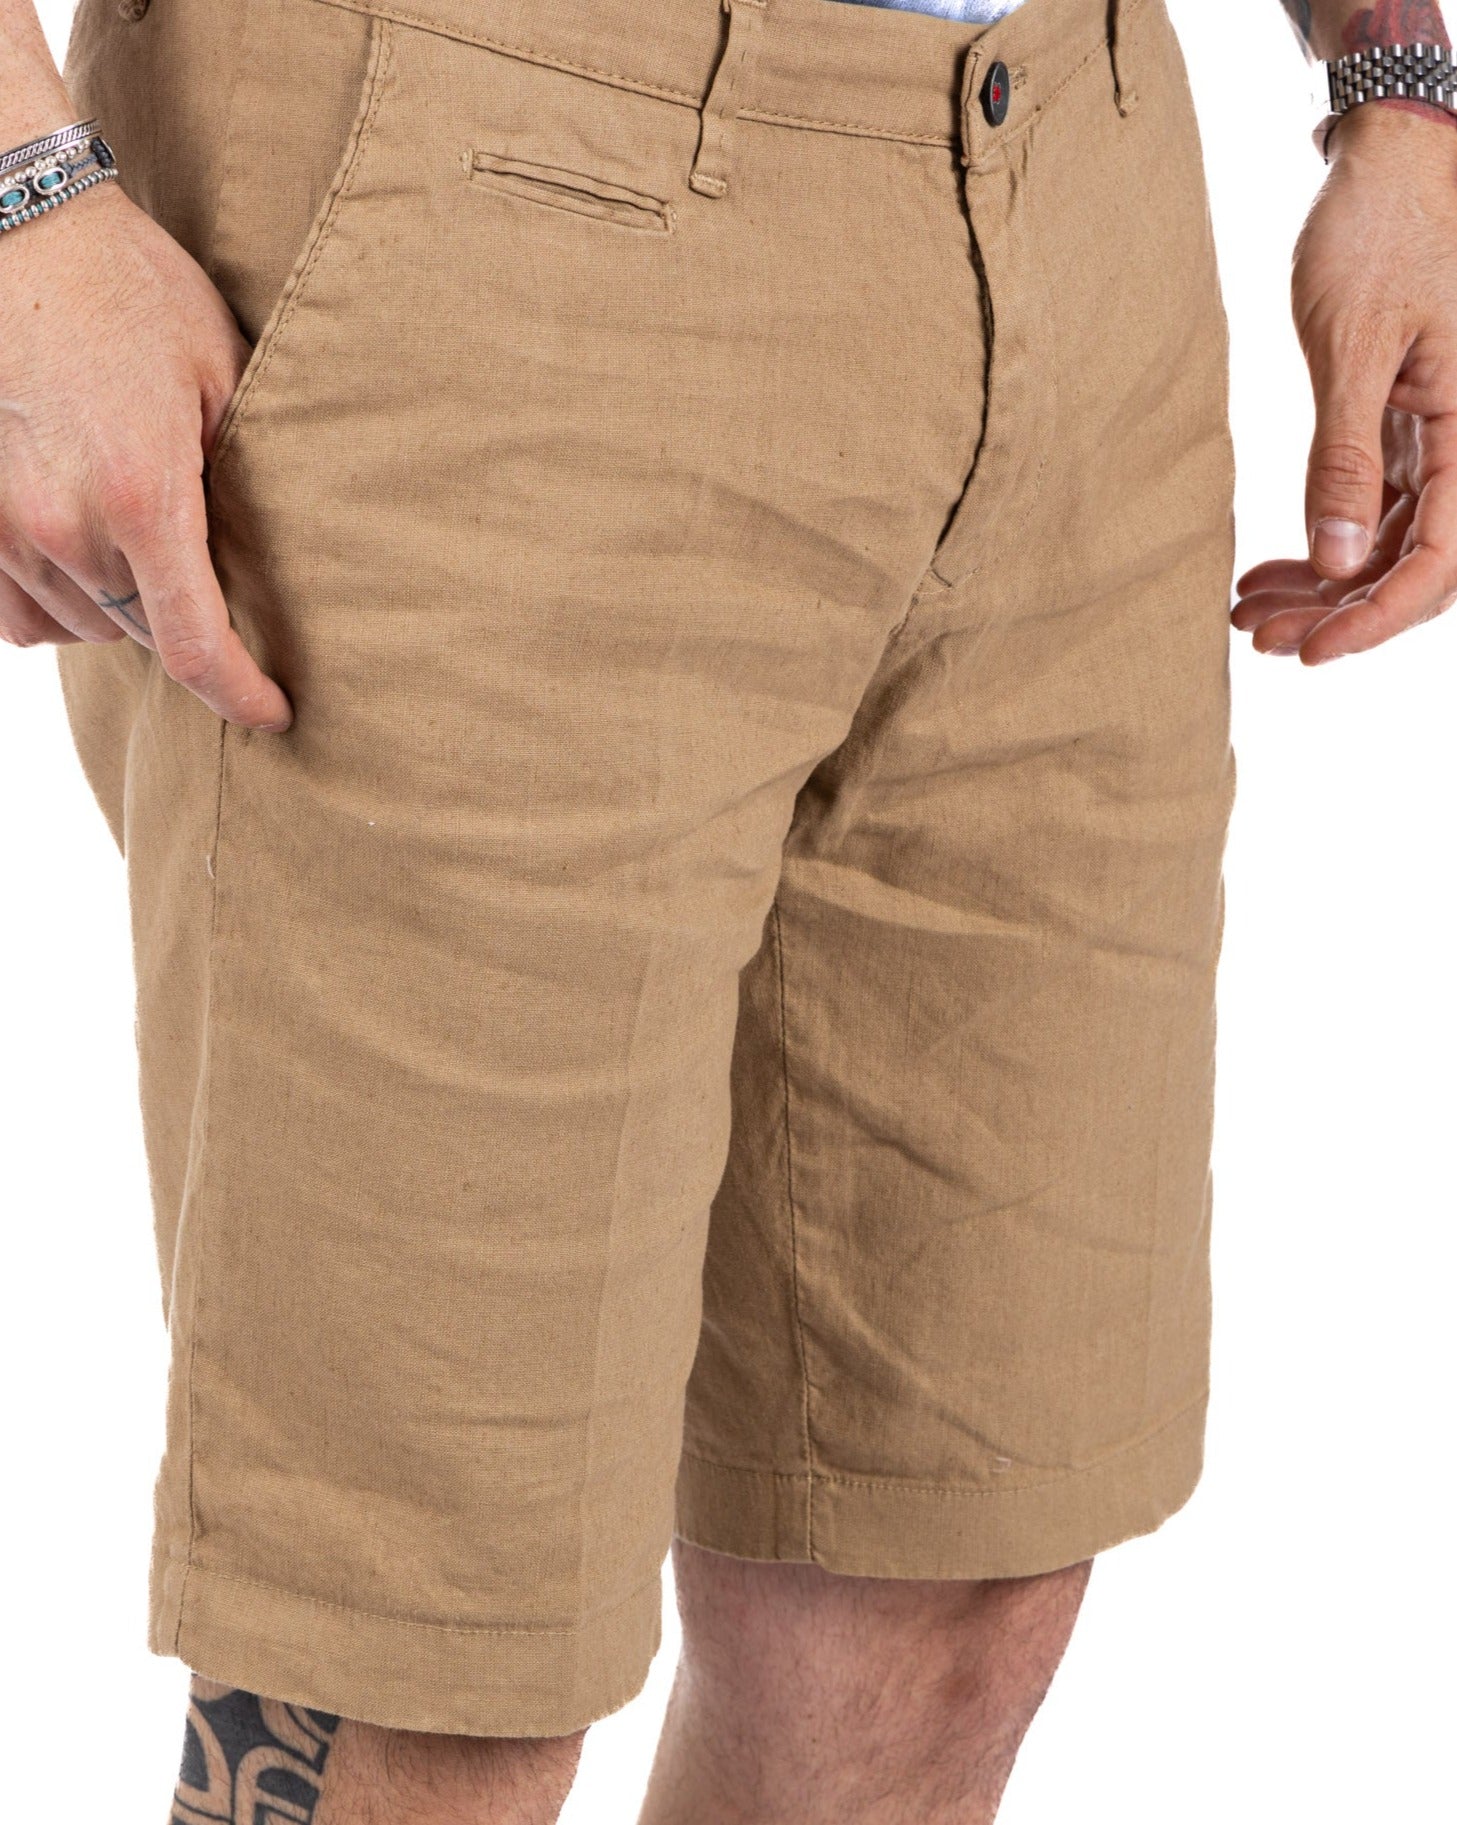 Mustique - biscuit Bermuda shorts in stretch linen